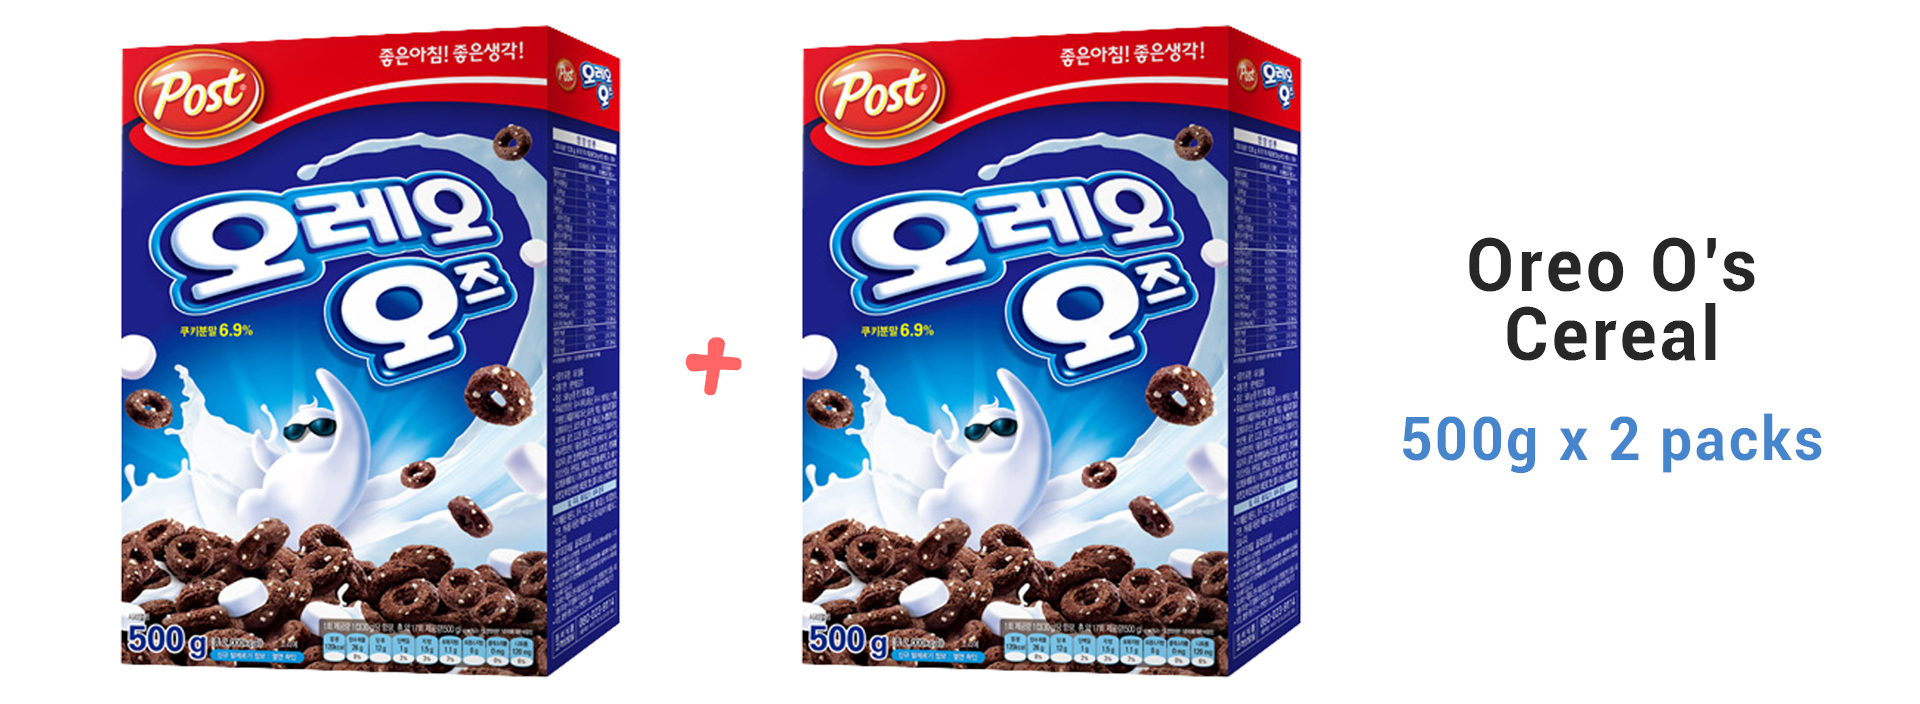 Oreo O's Cereal 2packs